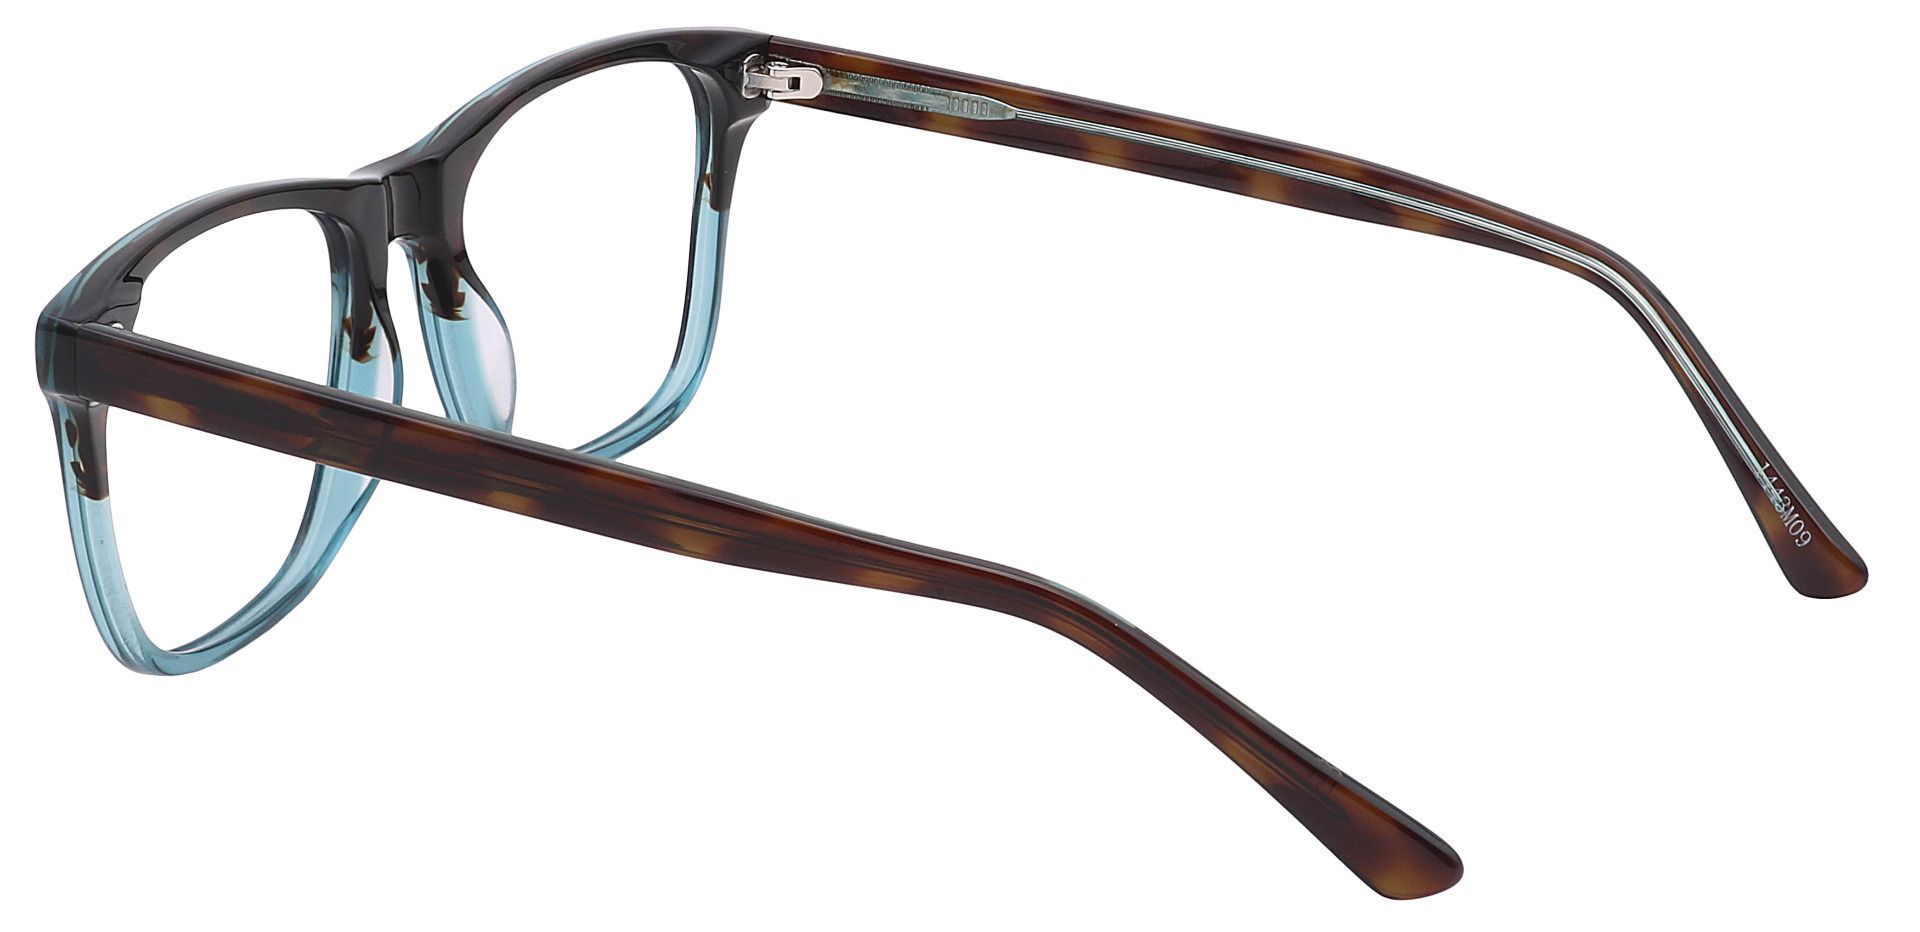 Cantina Square Eyeglasses Frame - Two